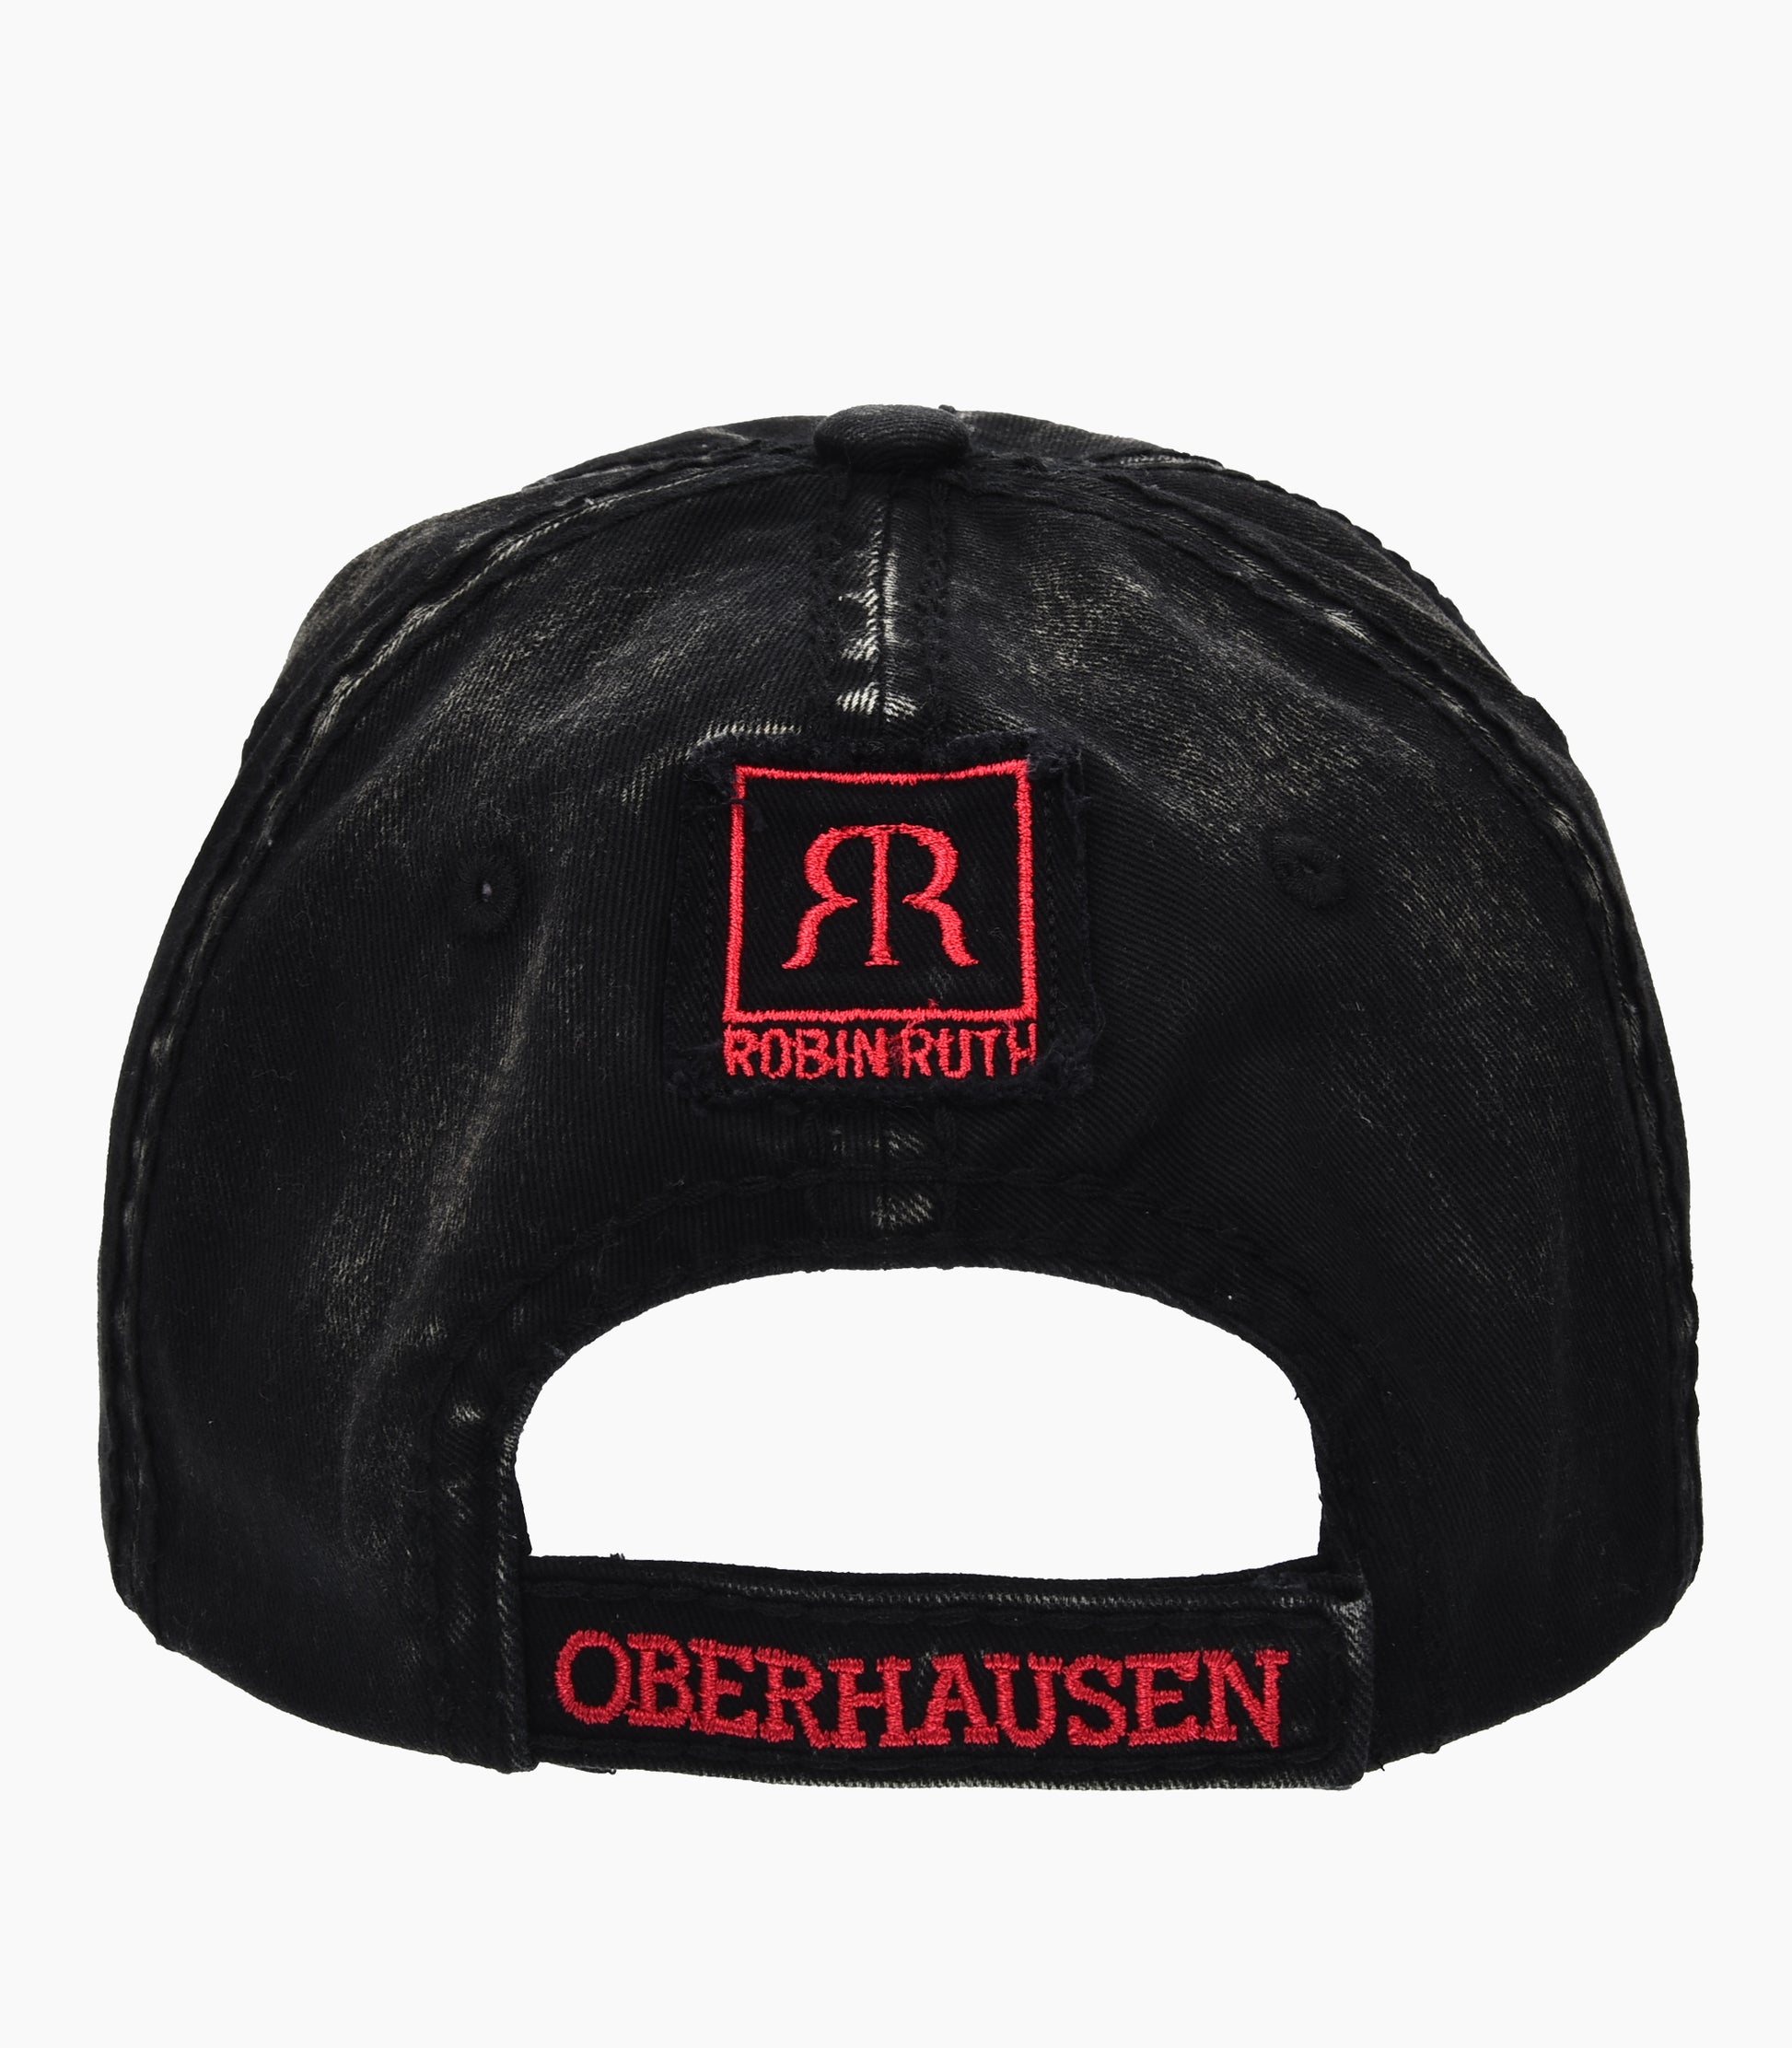 Oberhausen Cap - Robin Ruth